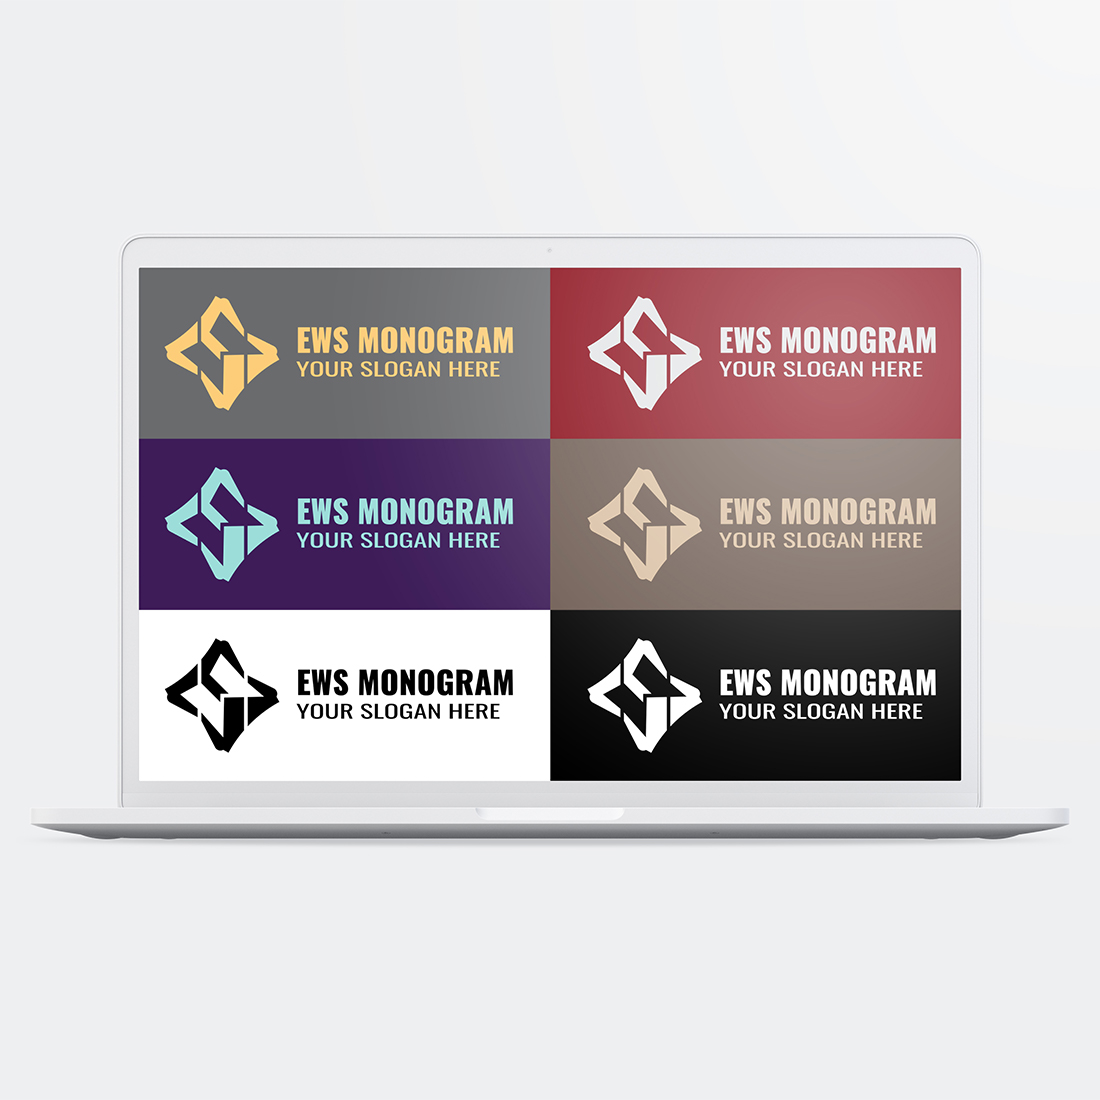 Monogram Logo Design cover image.